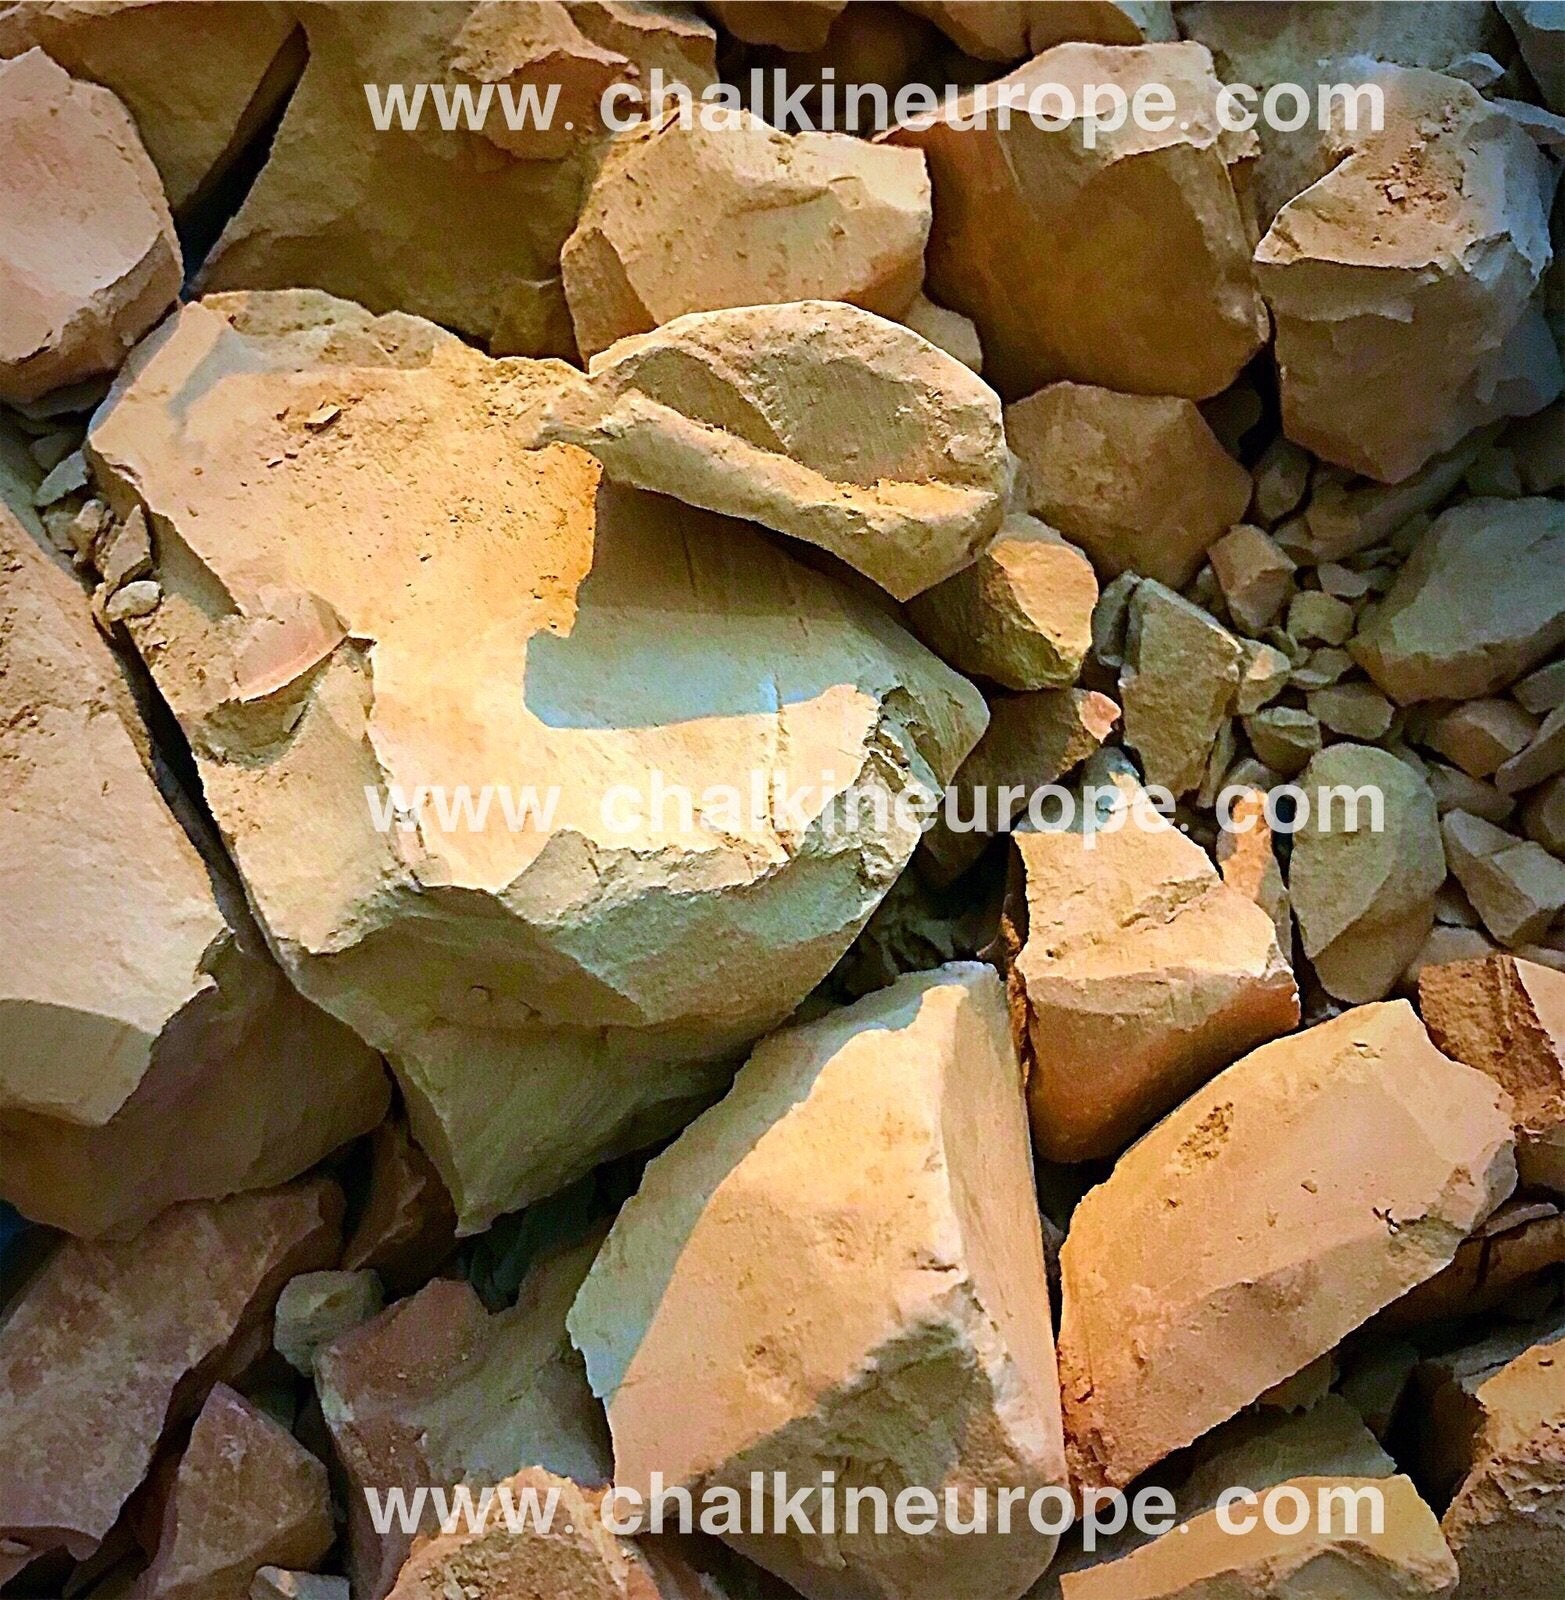 OlgaChalk Edible Clay, Turkestan Brown Clay 200gr.